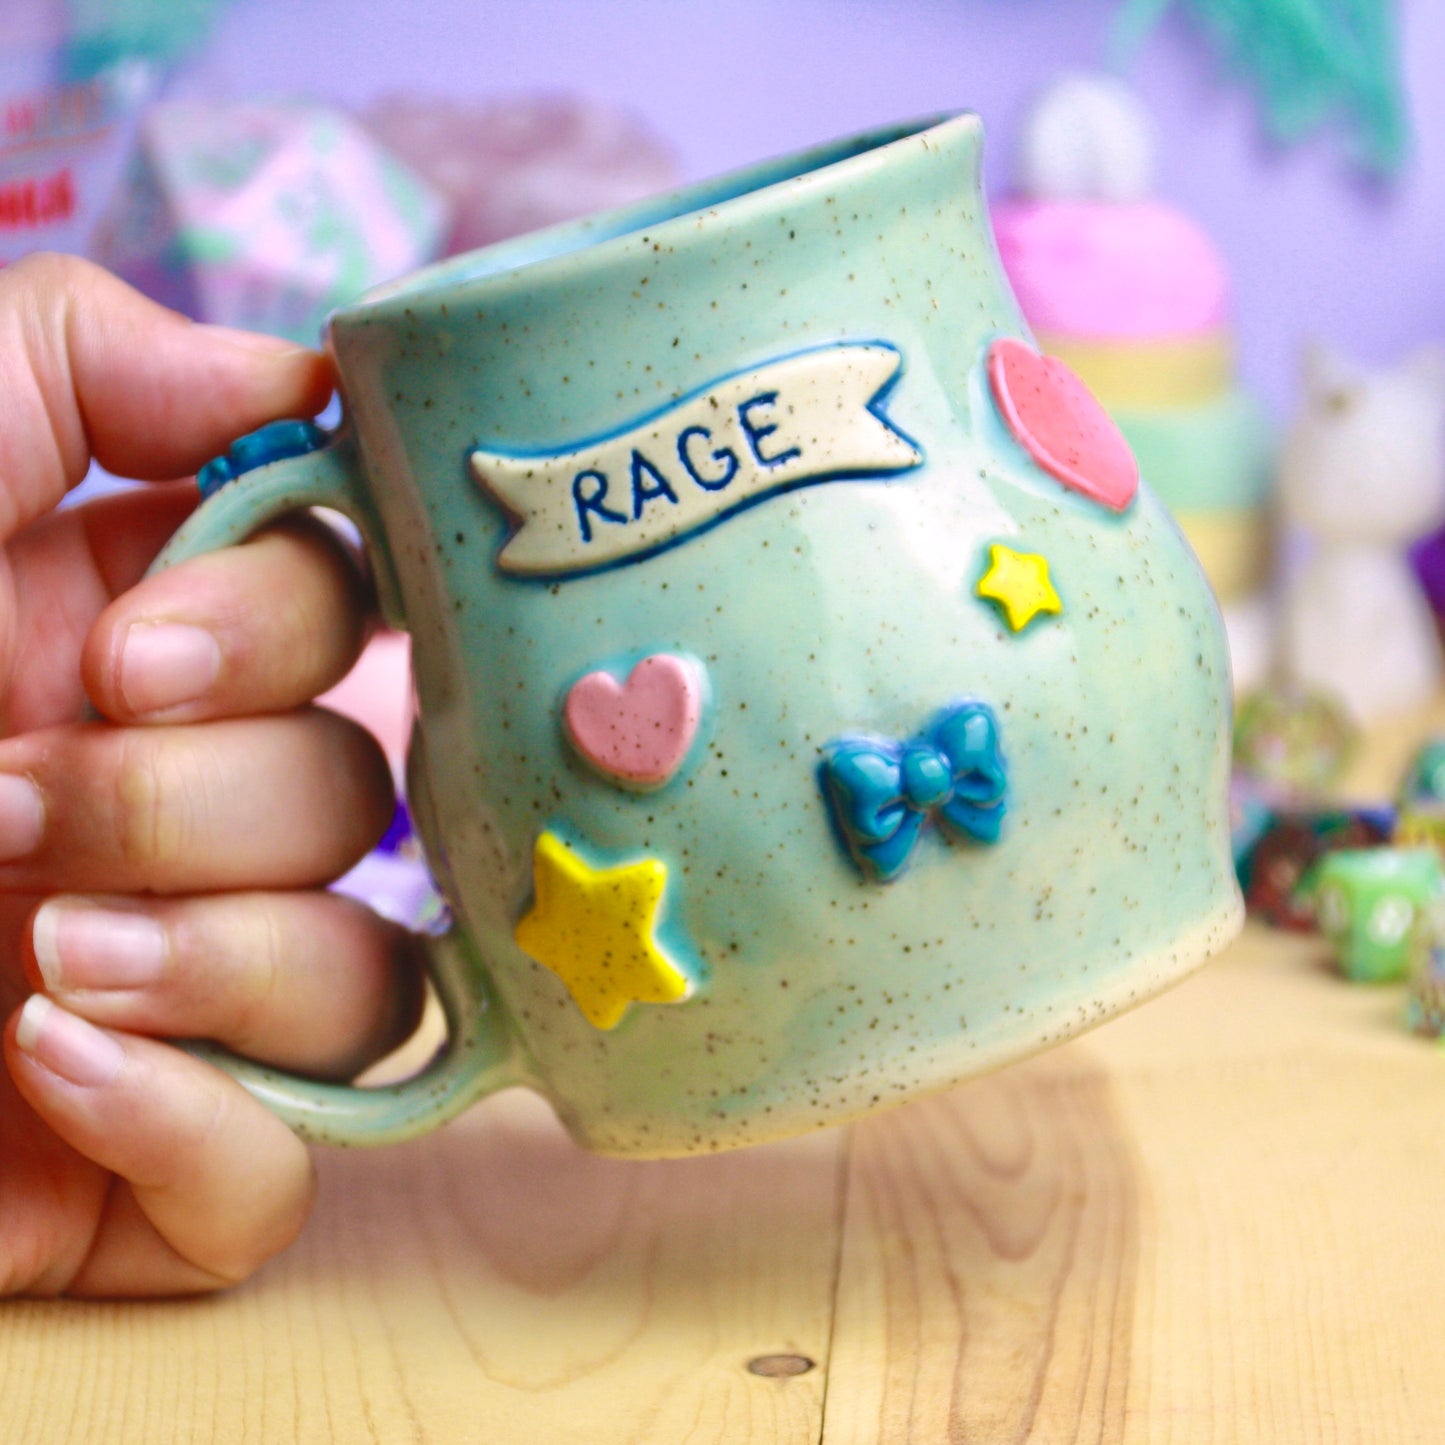 Rage Mug: Speckled Magical Girl Edition